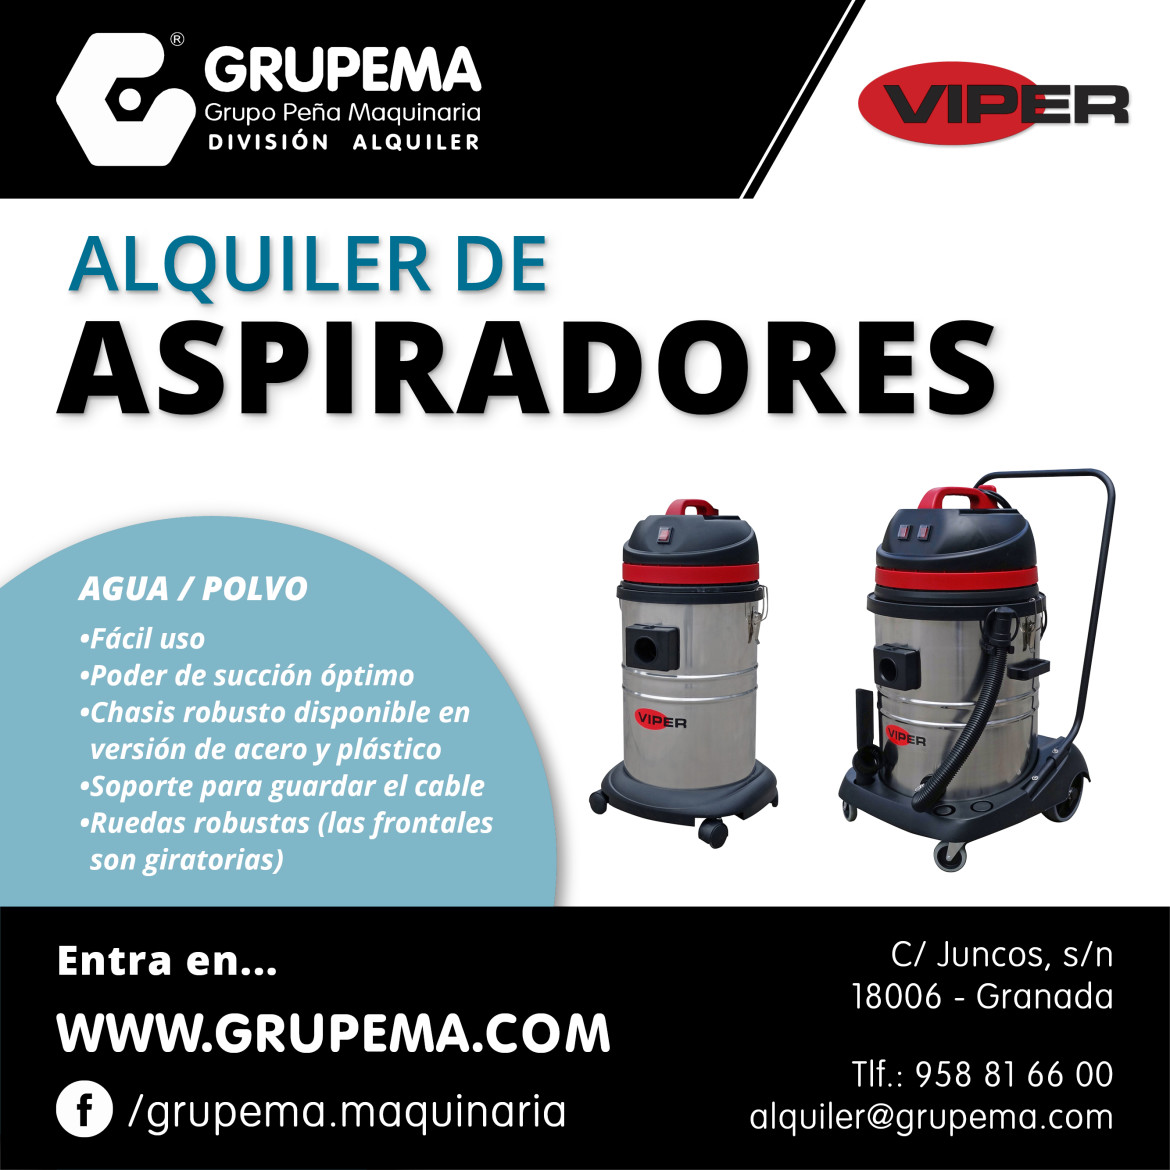 ALQUILER DE ASPIRADORES VIPER